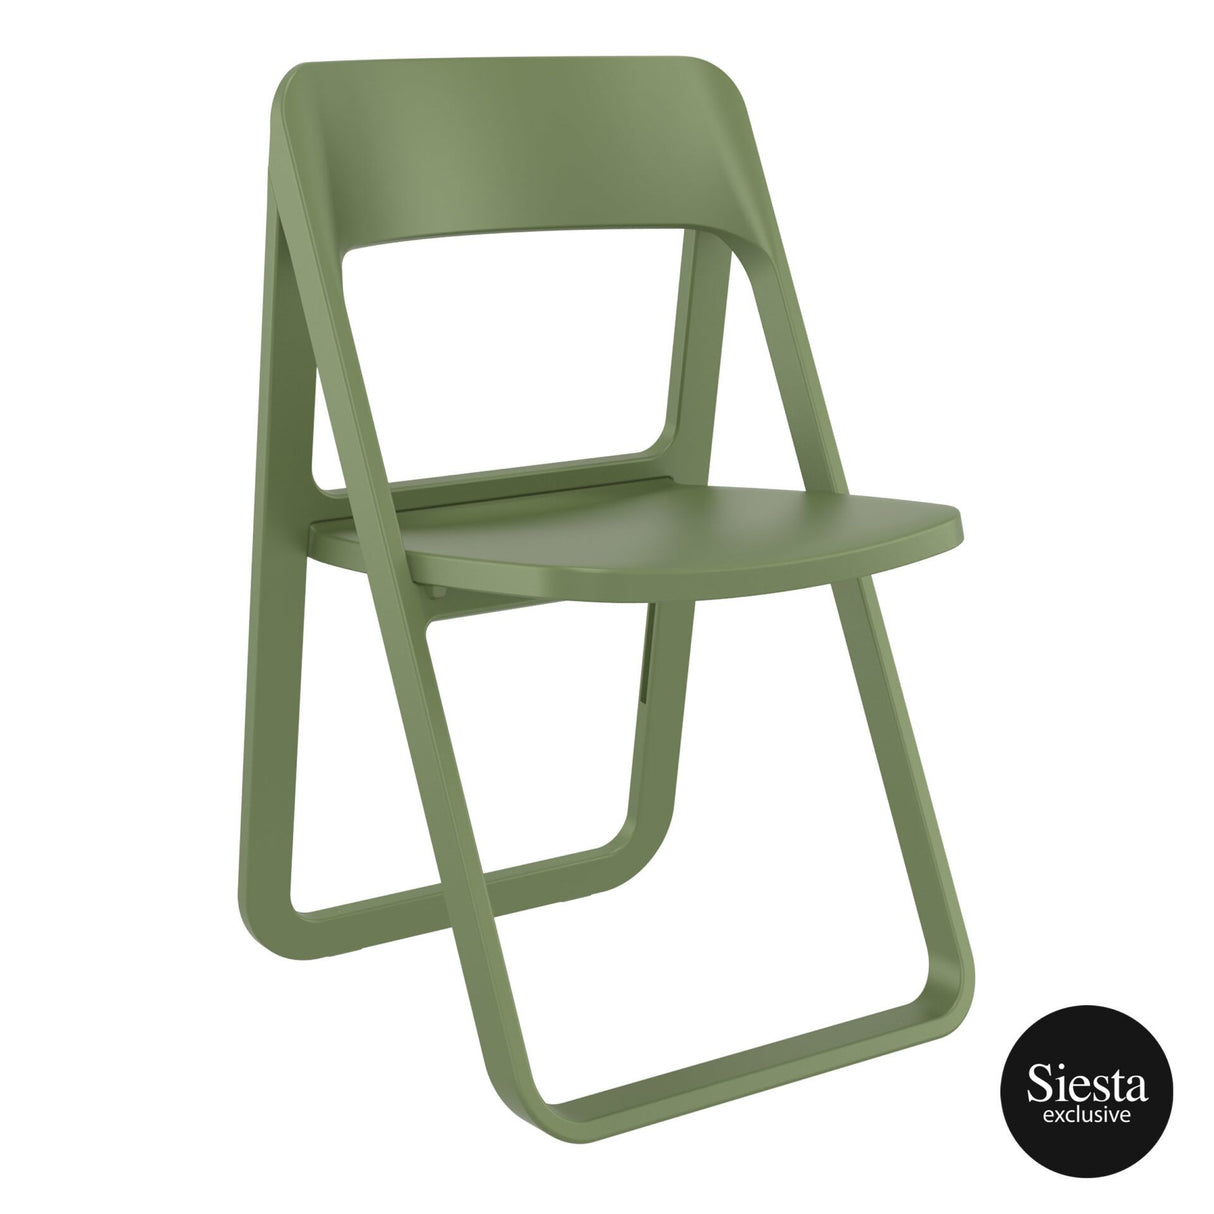 Dream Folding Chair by Siesta